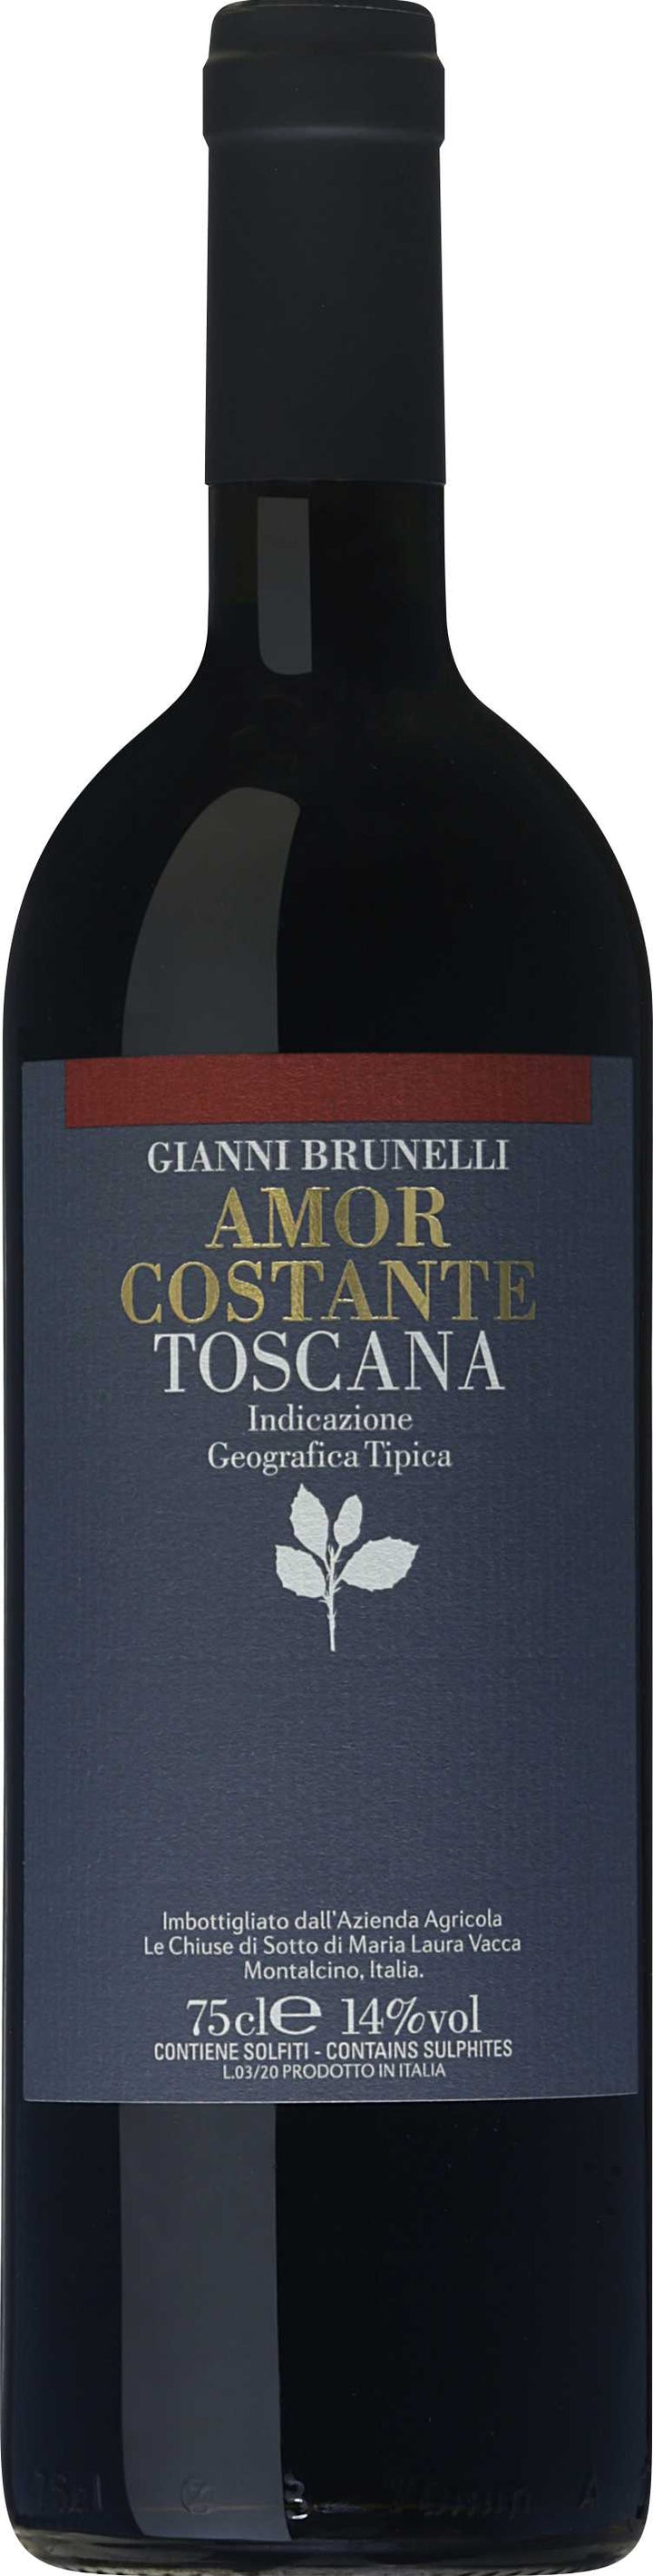 2020 Gianni Brunelli Amor Costante Toscana IGT